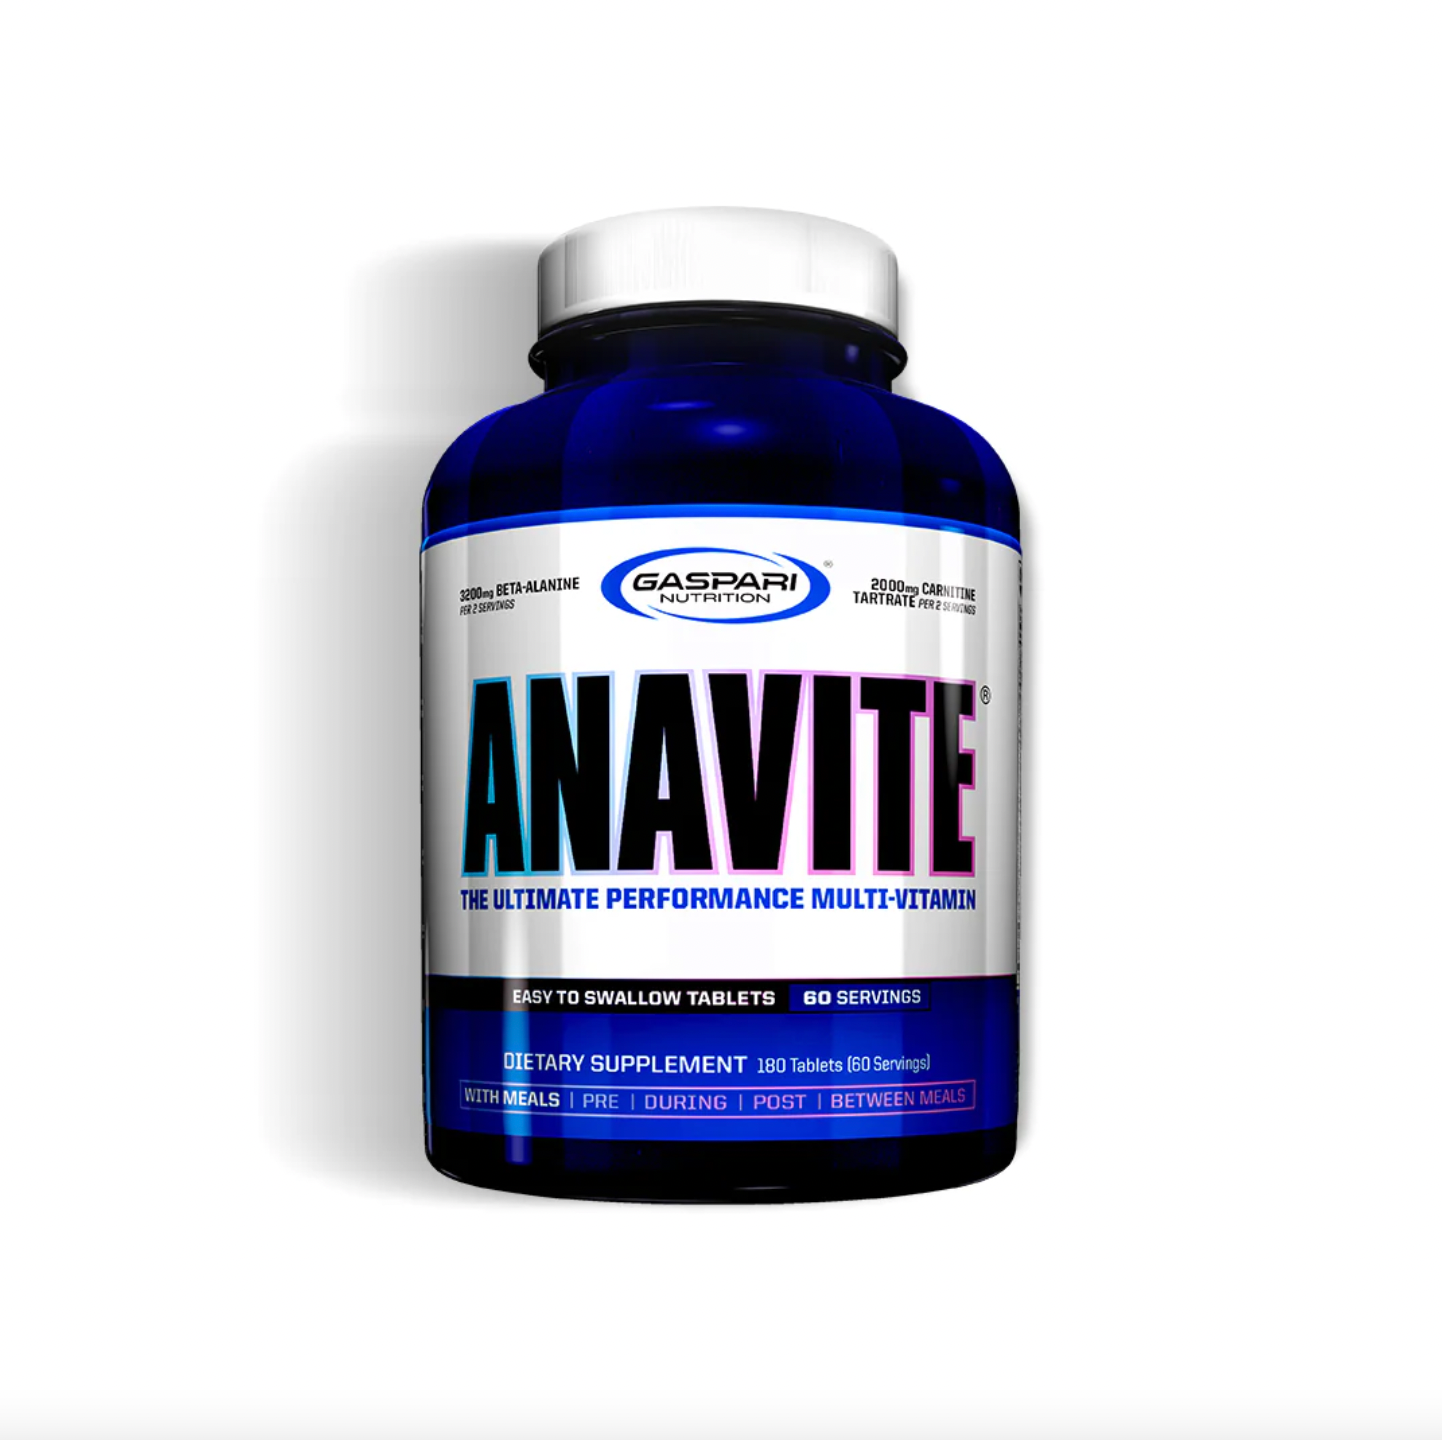 Image showing Gaspari Nutrition's Anavite multi-vitamin tablets.